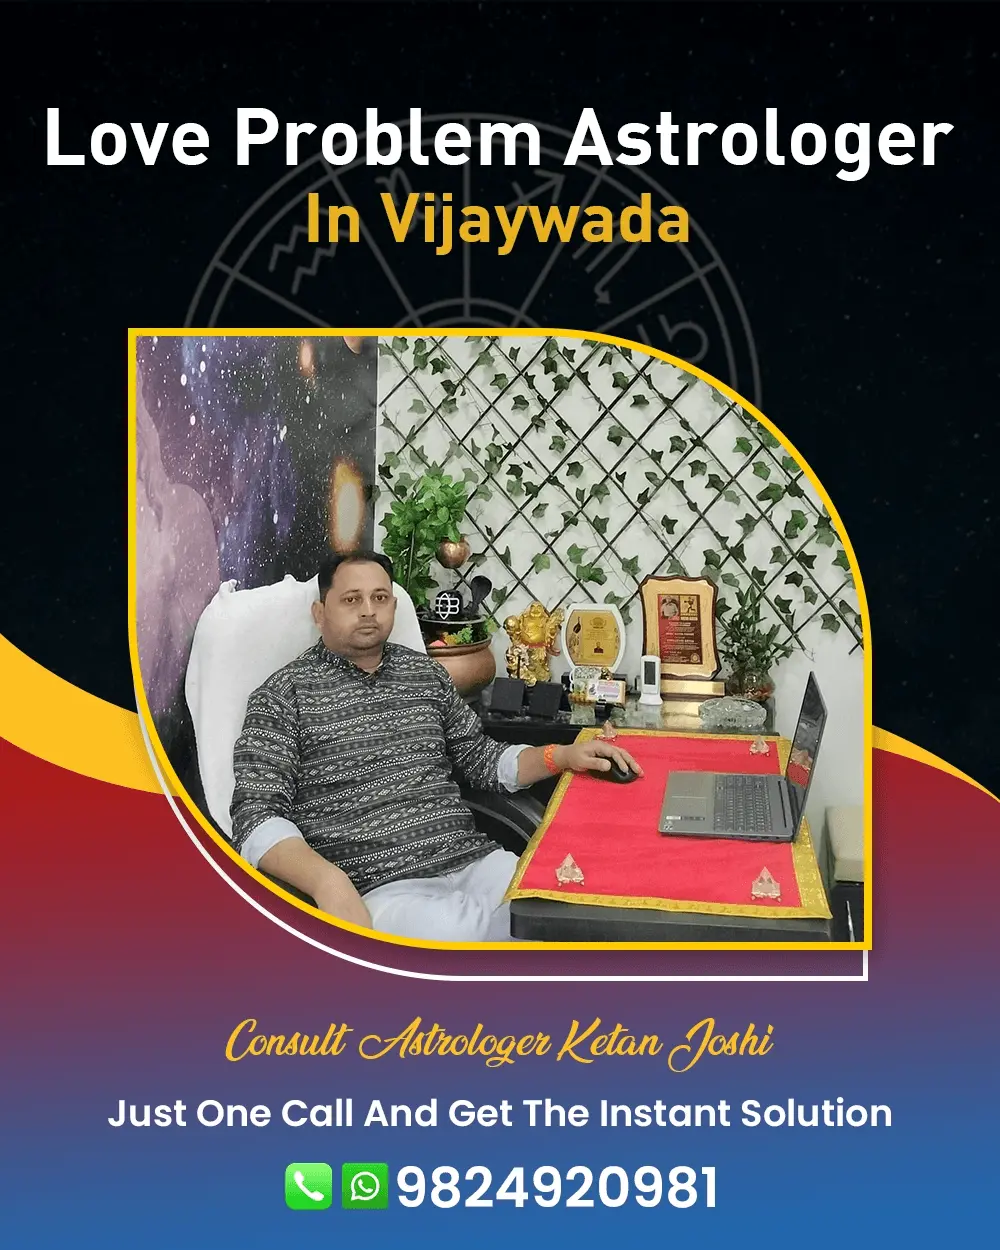 Love Problem Astrologer In Vijaywada